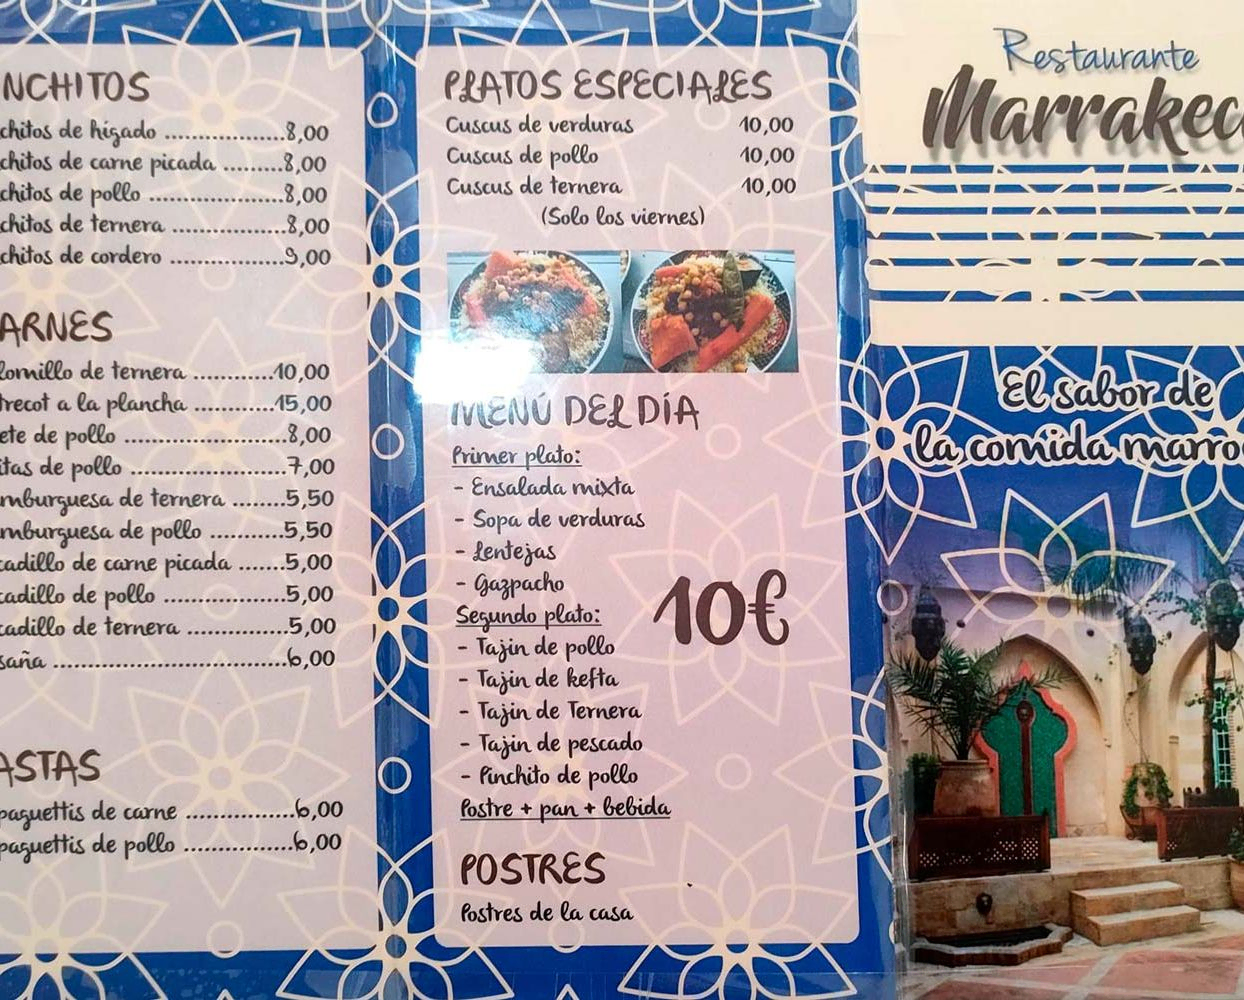 Restaurante Marrakech carta menú 1